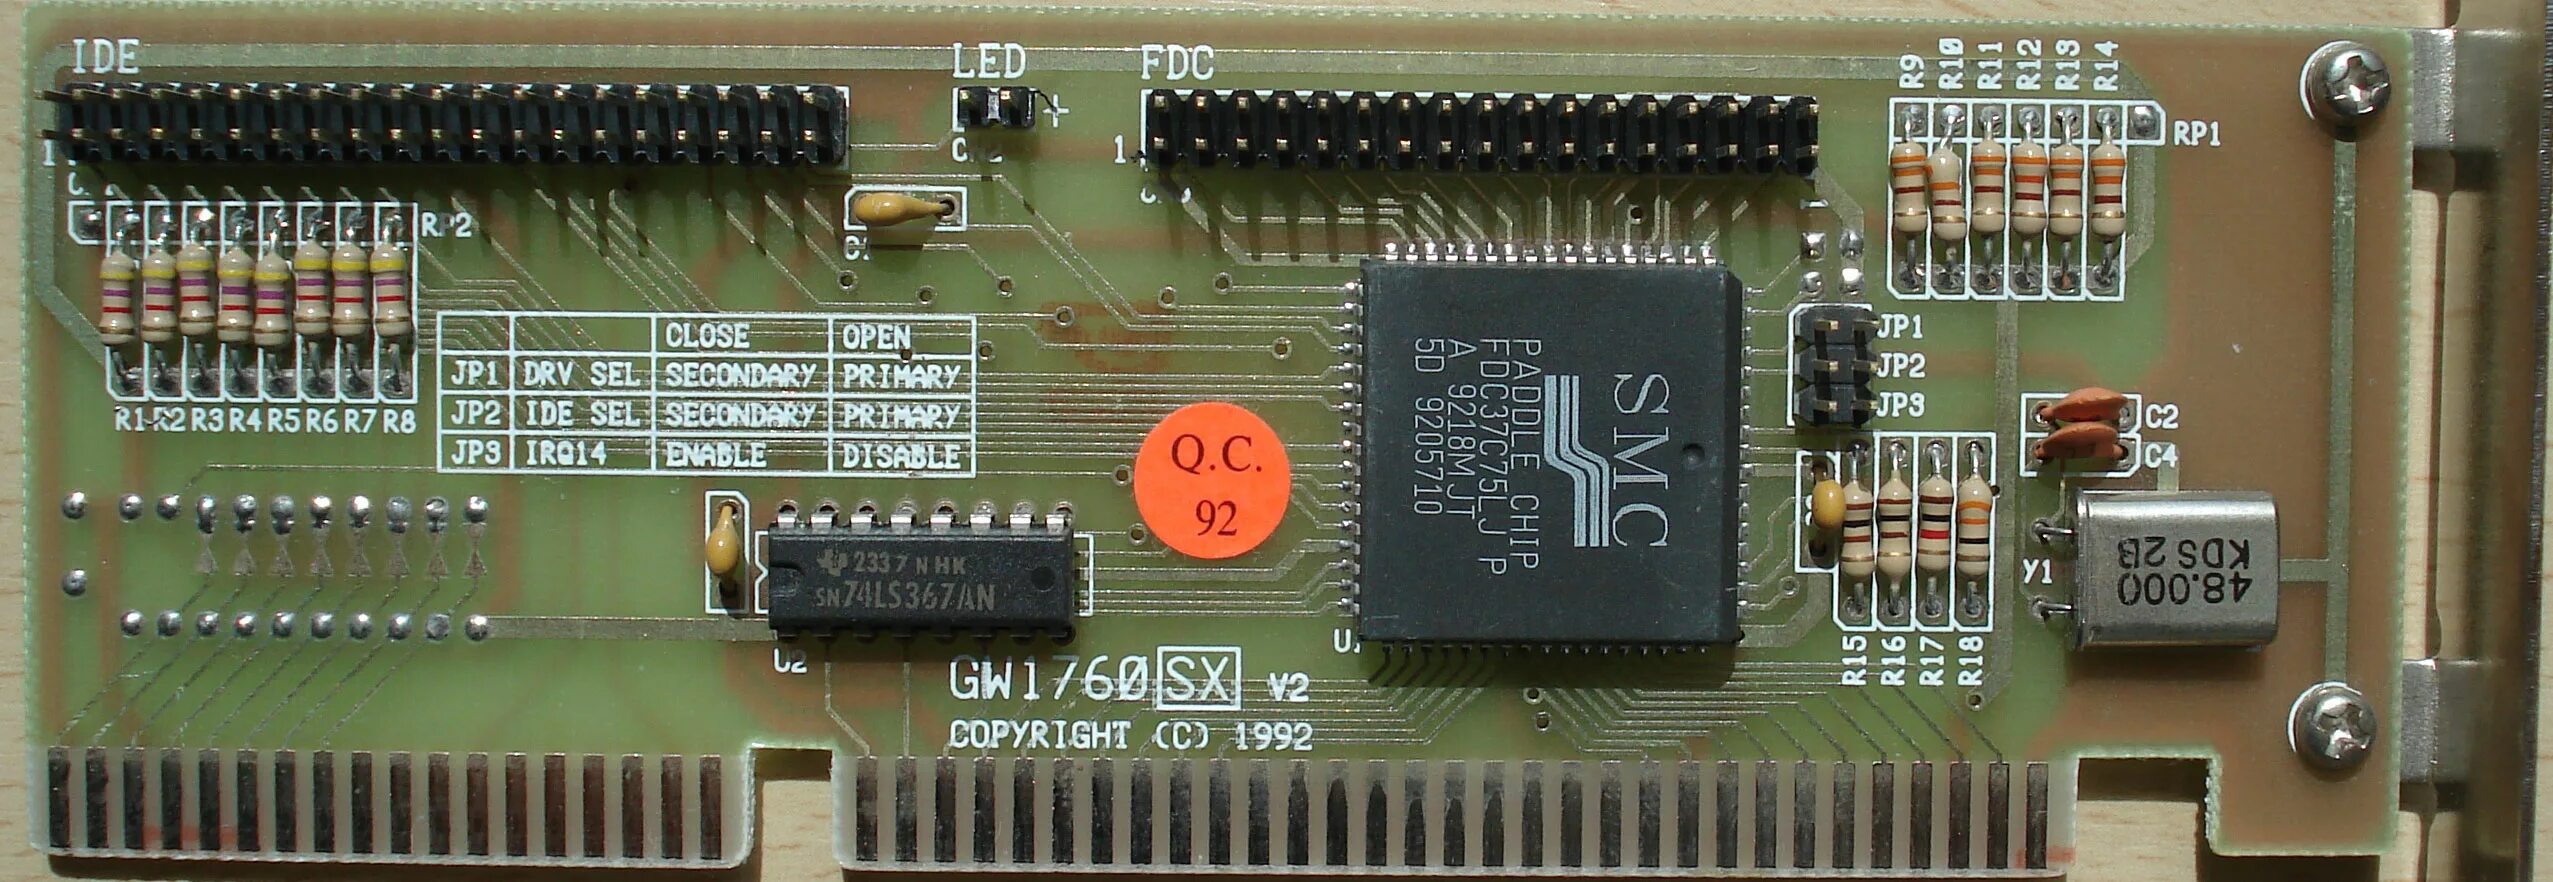 C 78. Fdc37c65b. FDC 3574 контроллер. Контроллер floppy. C0037.